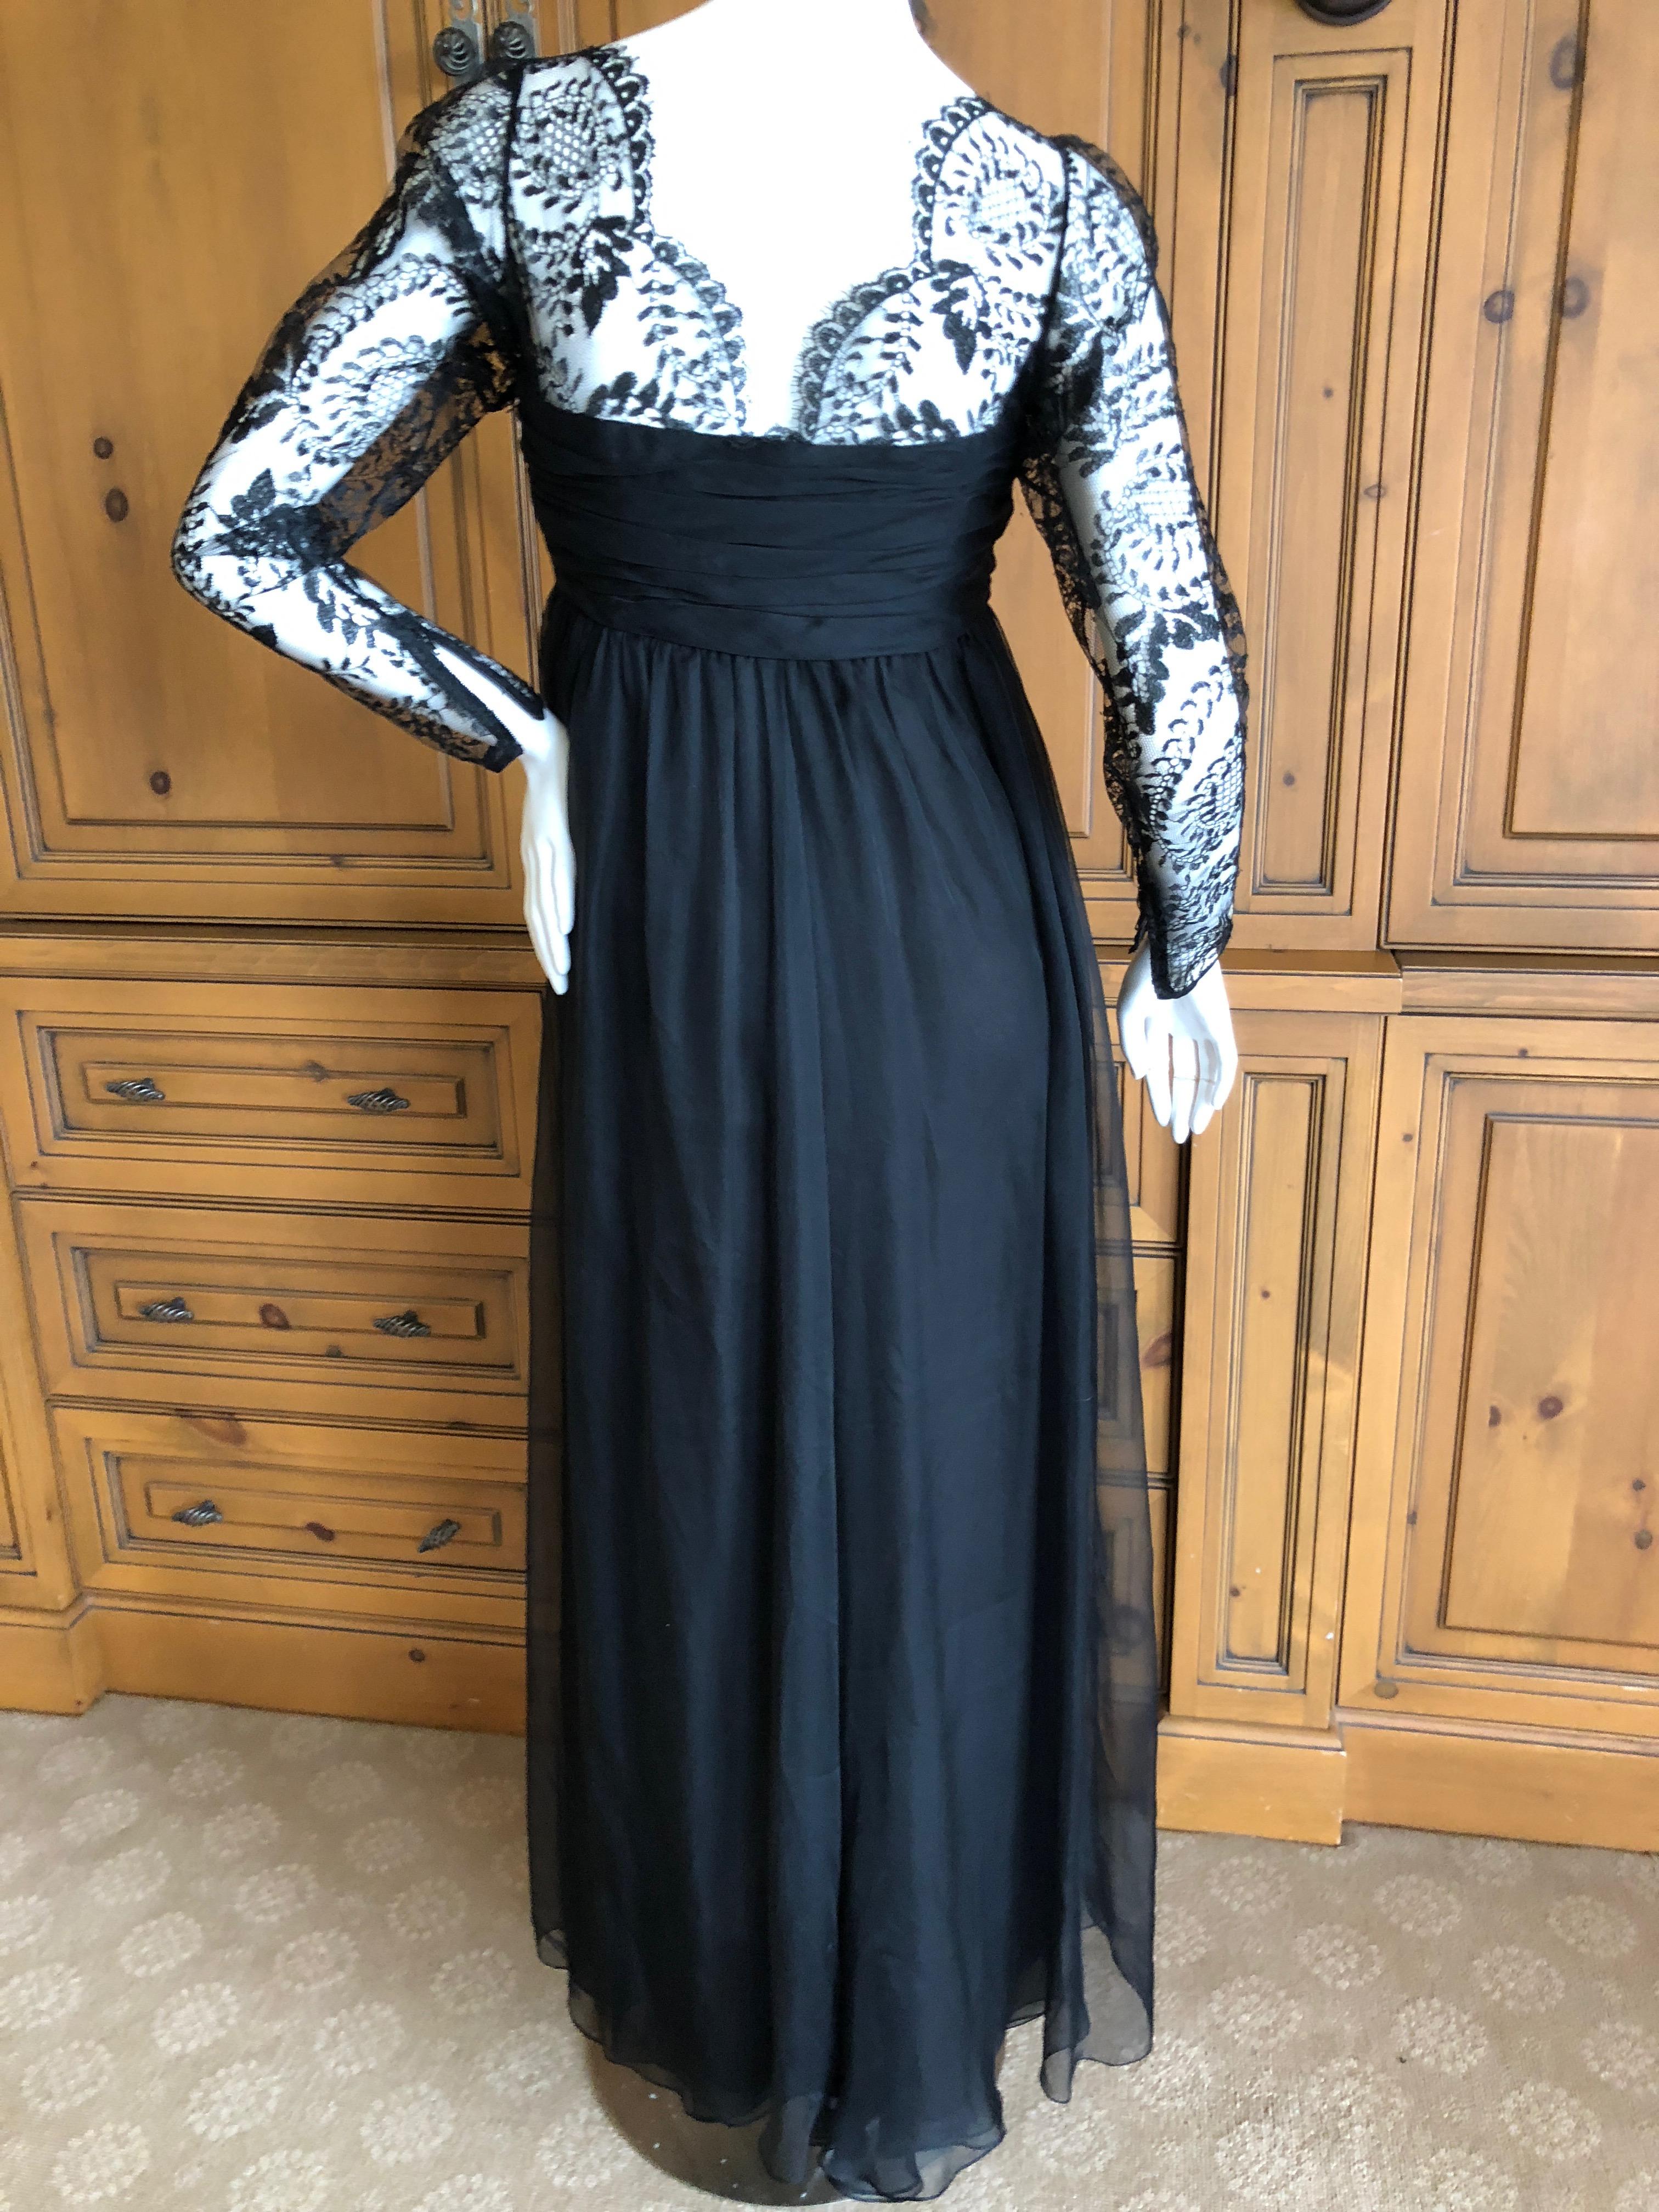 Yves Saint Laurent Numbered Haute Couture 1970's Black Lace Flou Evening Dress For Sale 4